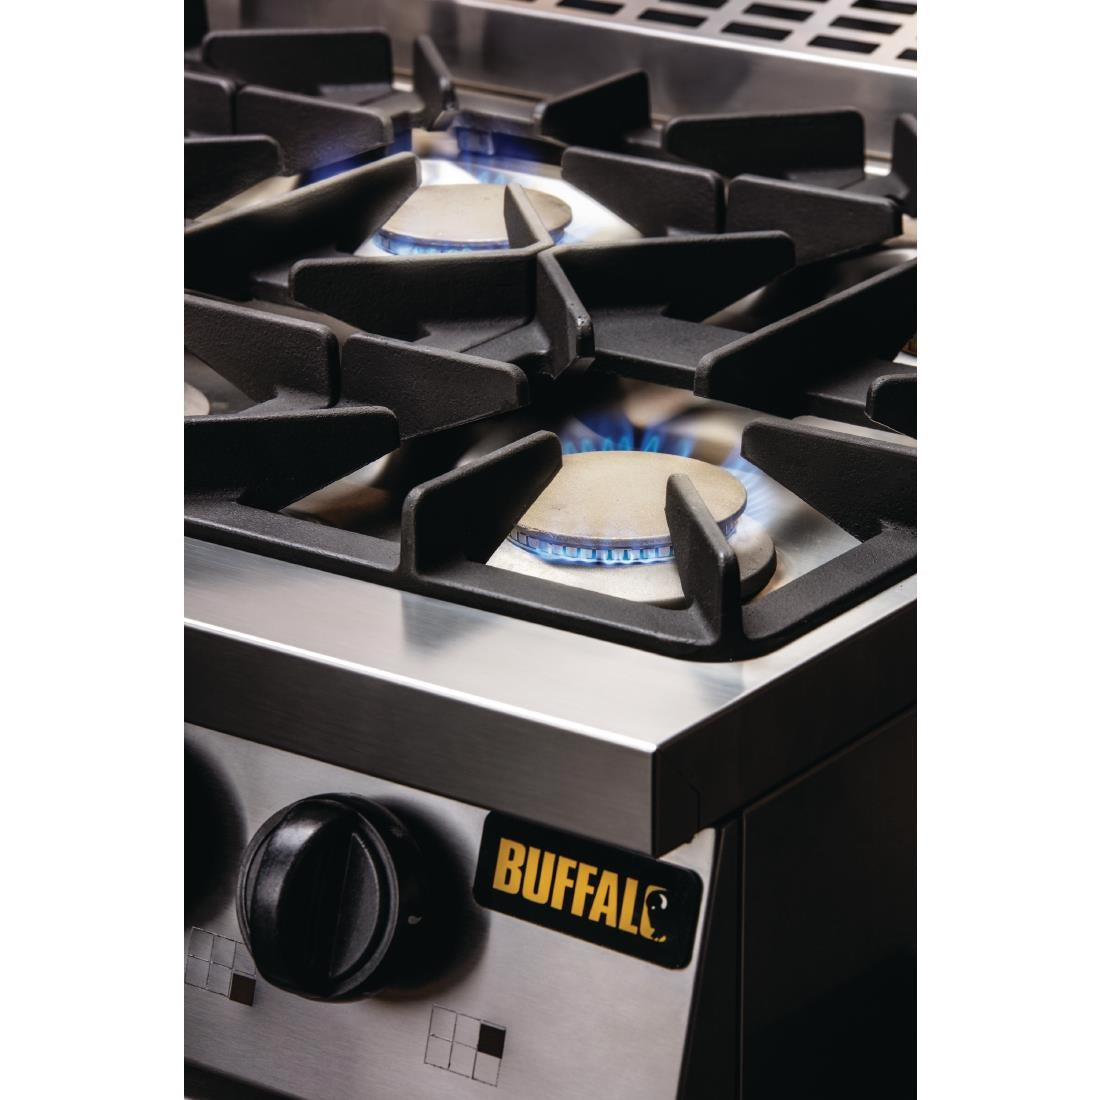 CT253 Buffalo 6 Burner Oven Range with Castors JD Catering Equipment Solutions Ltd